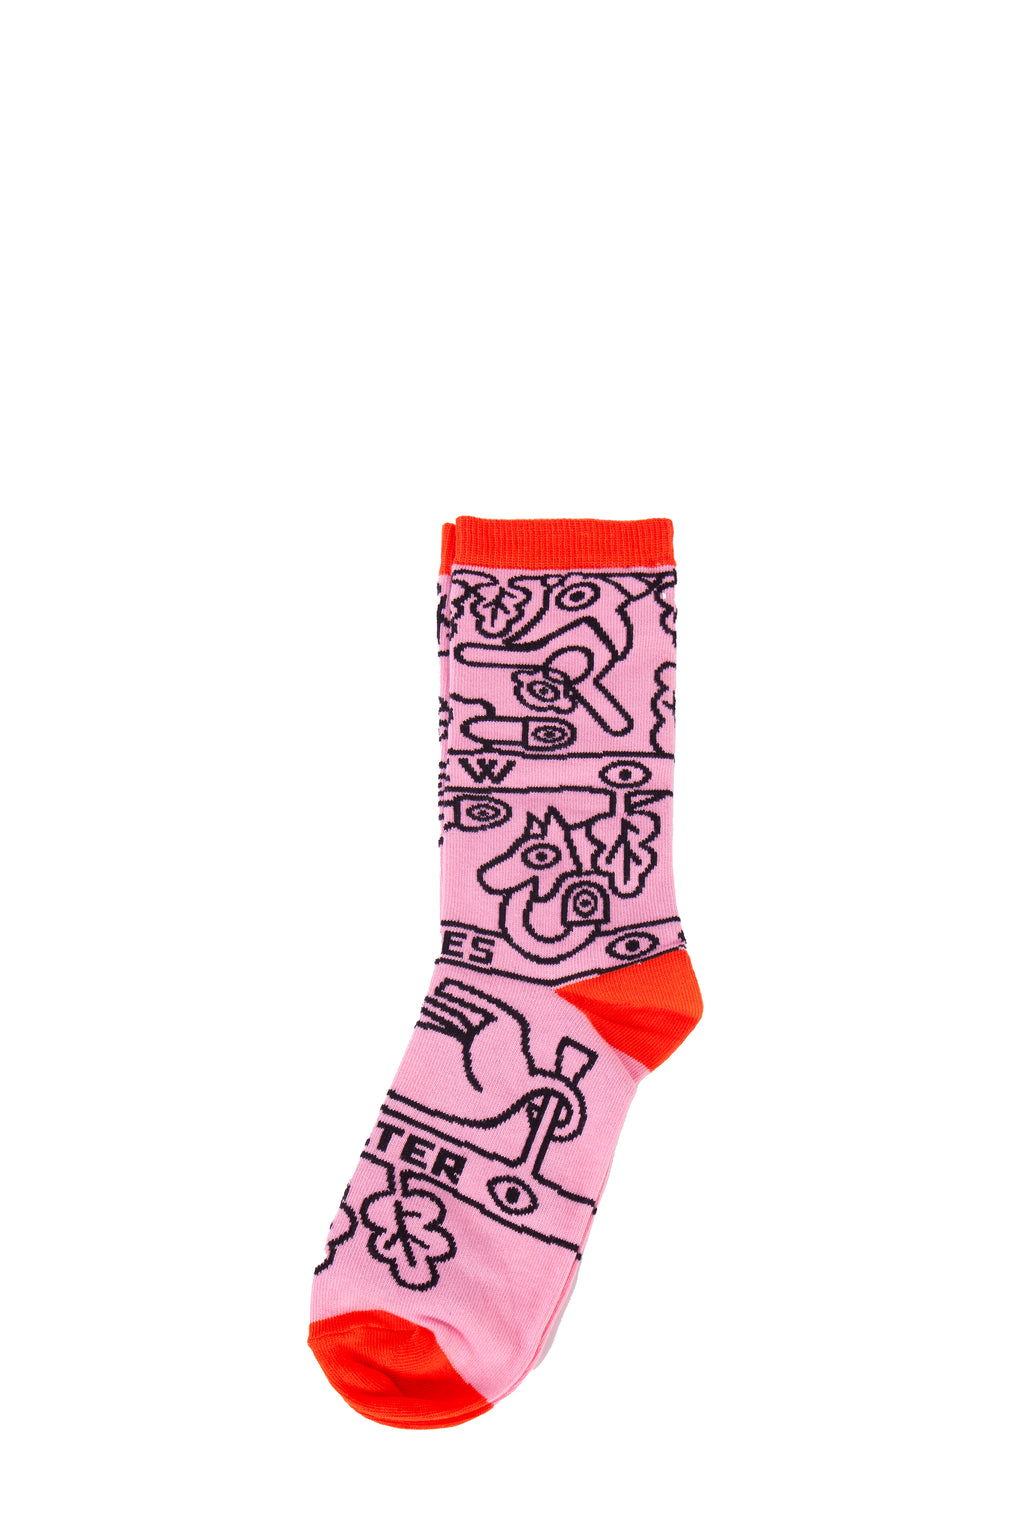 NEW EYES Socks - Pink